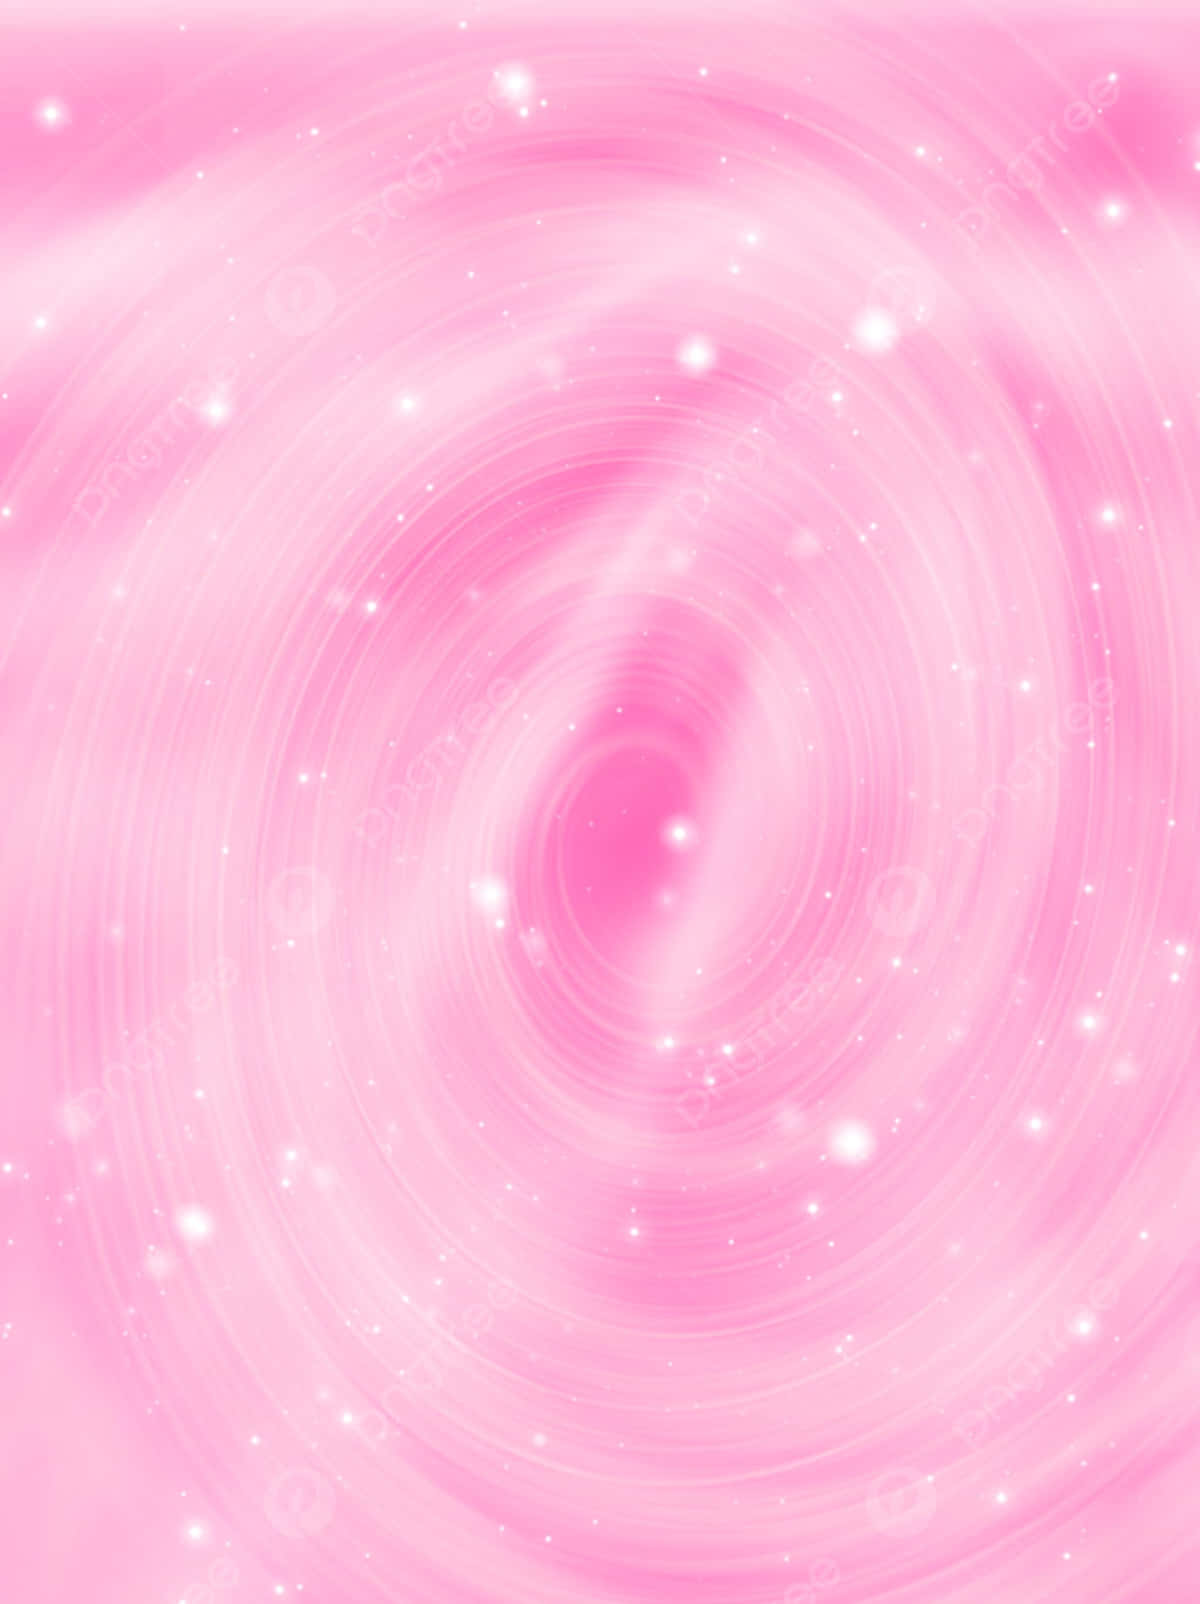 Soft Pink Swirl Wallpaper